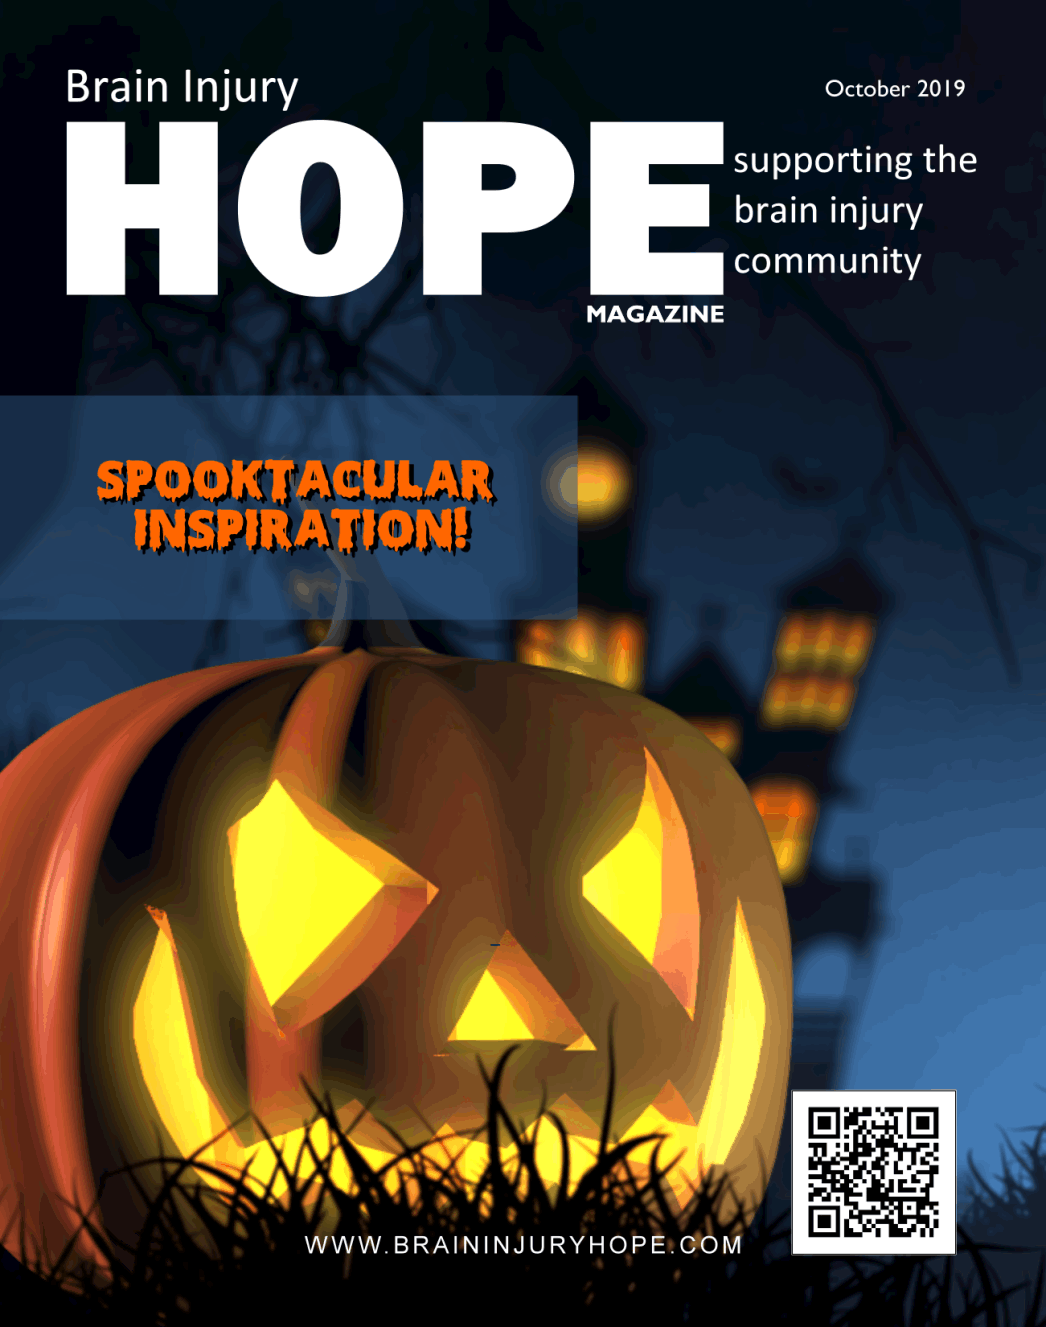 Hope after Brain Injury Magazine